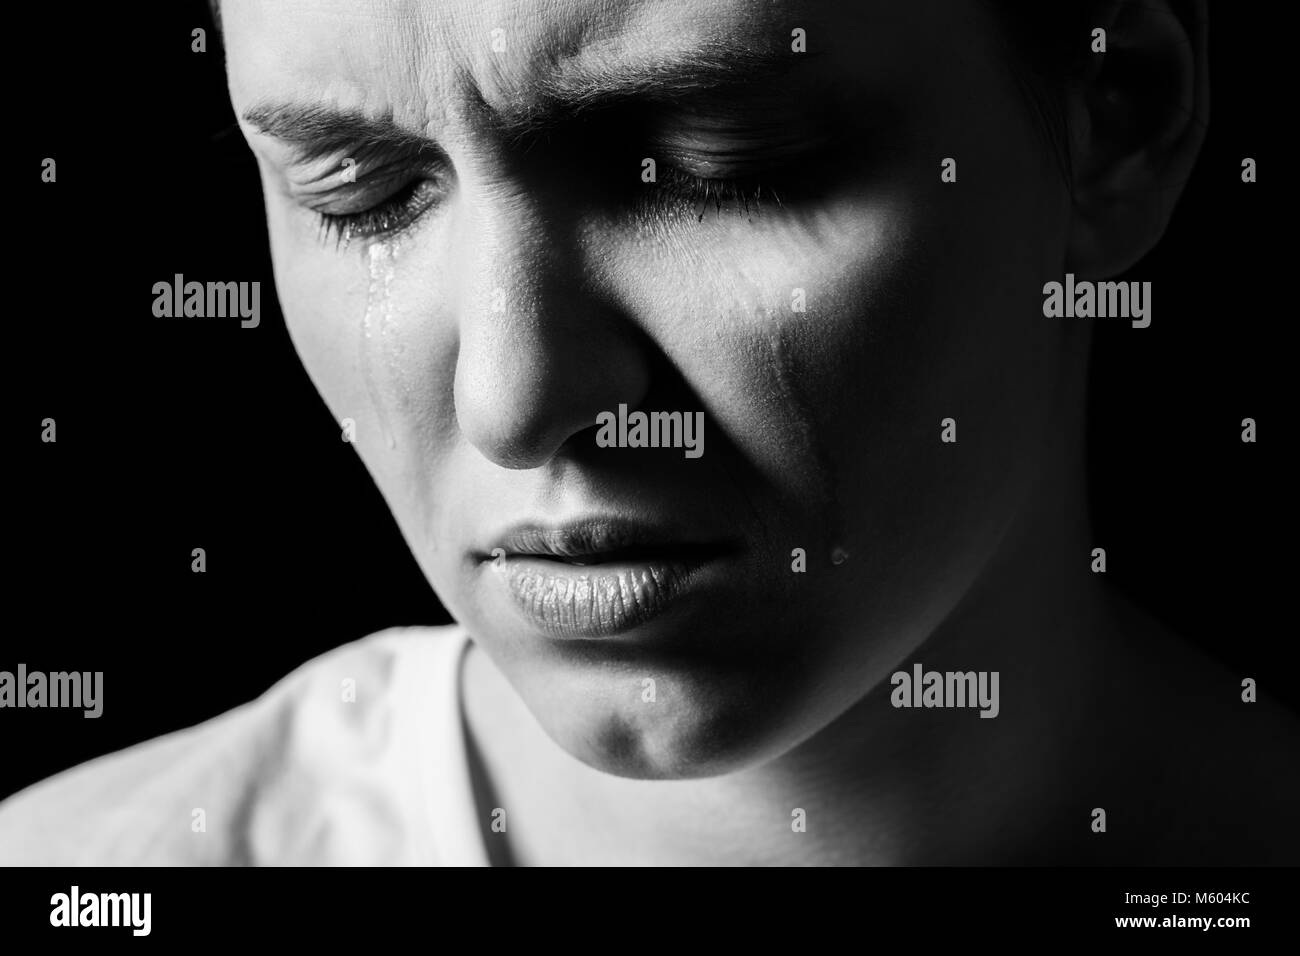 sad woman crying on black background, closeup portrait, monochrome Stock Photo